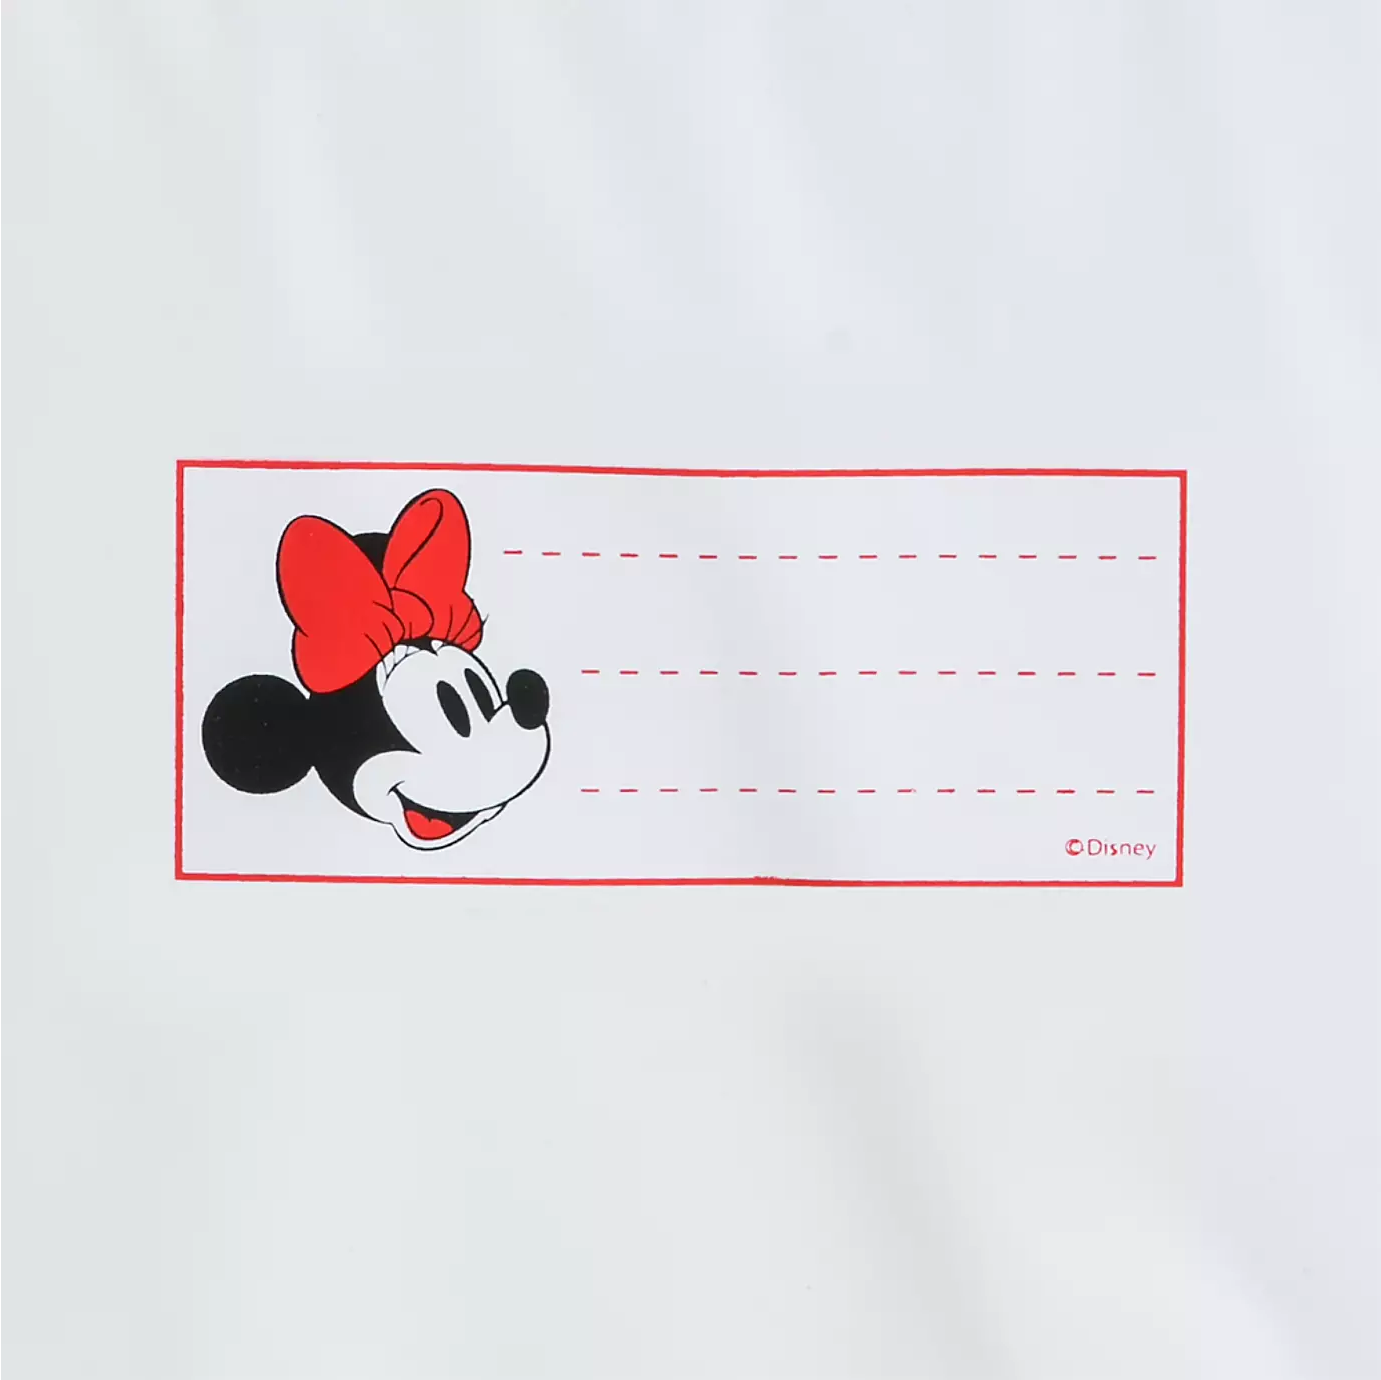 Disney Mickey and Minnie Mouse Rainbow 2-Ounce Mini Shot Glasses